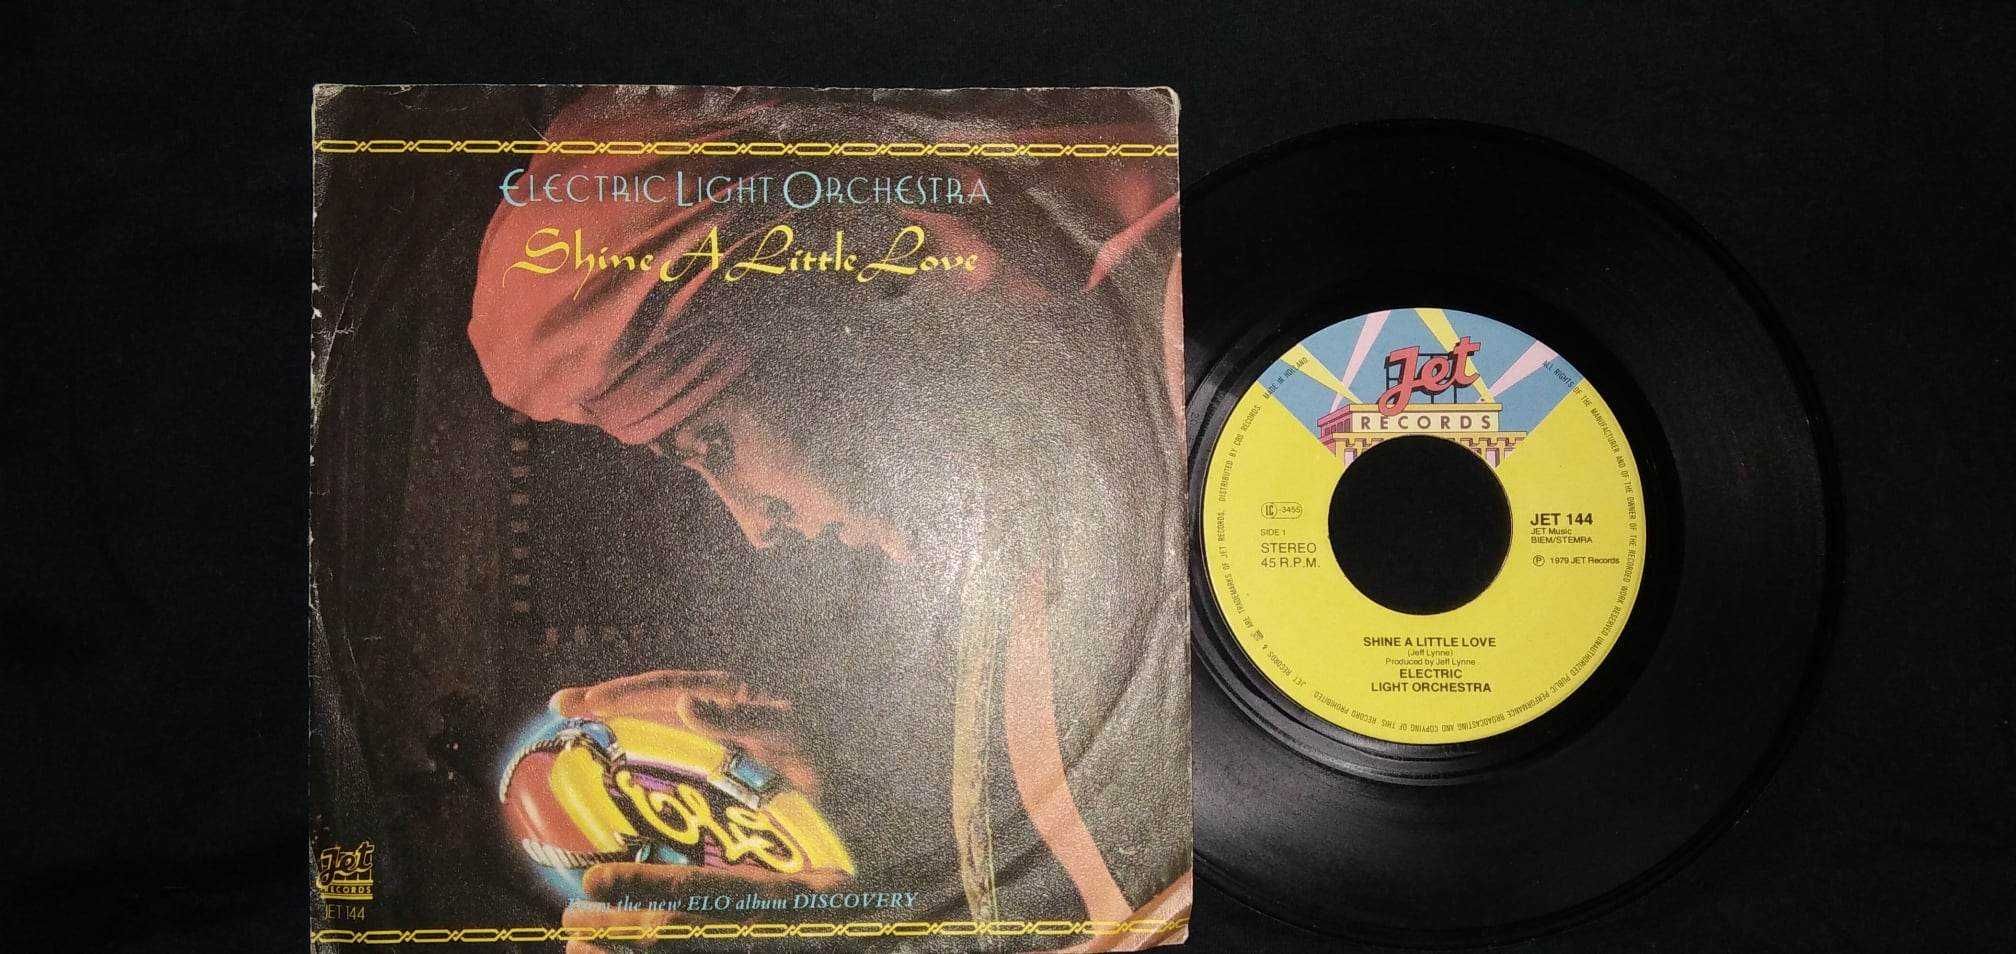 Electric Light Orchestra – Shine A Little Love (7" vinil) 1979